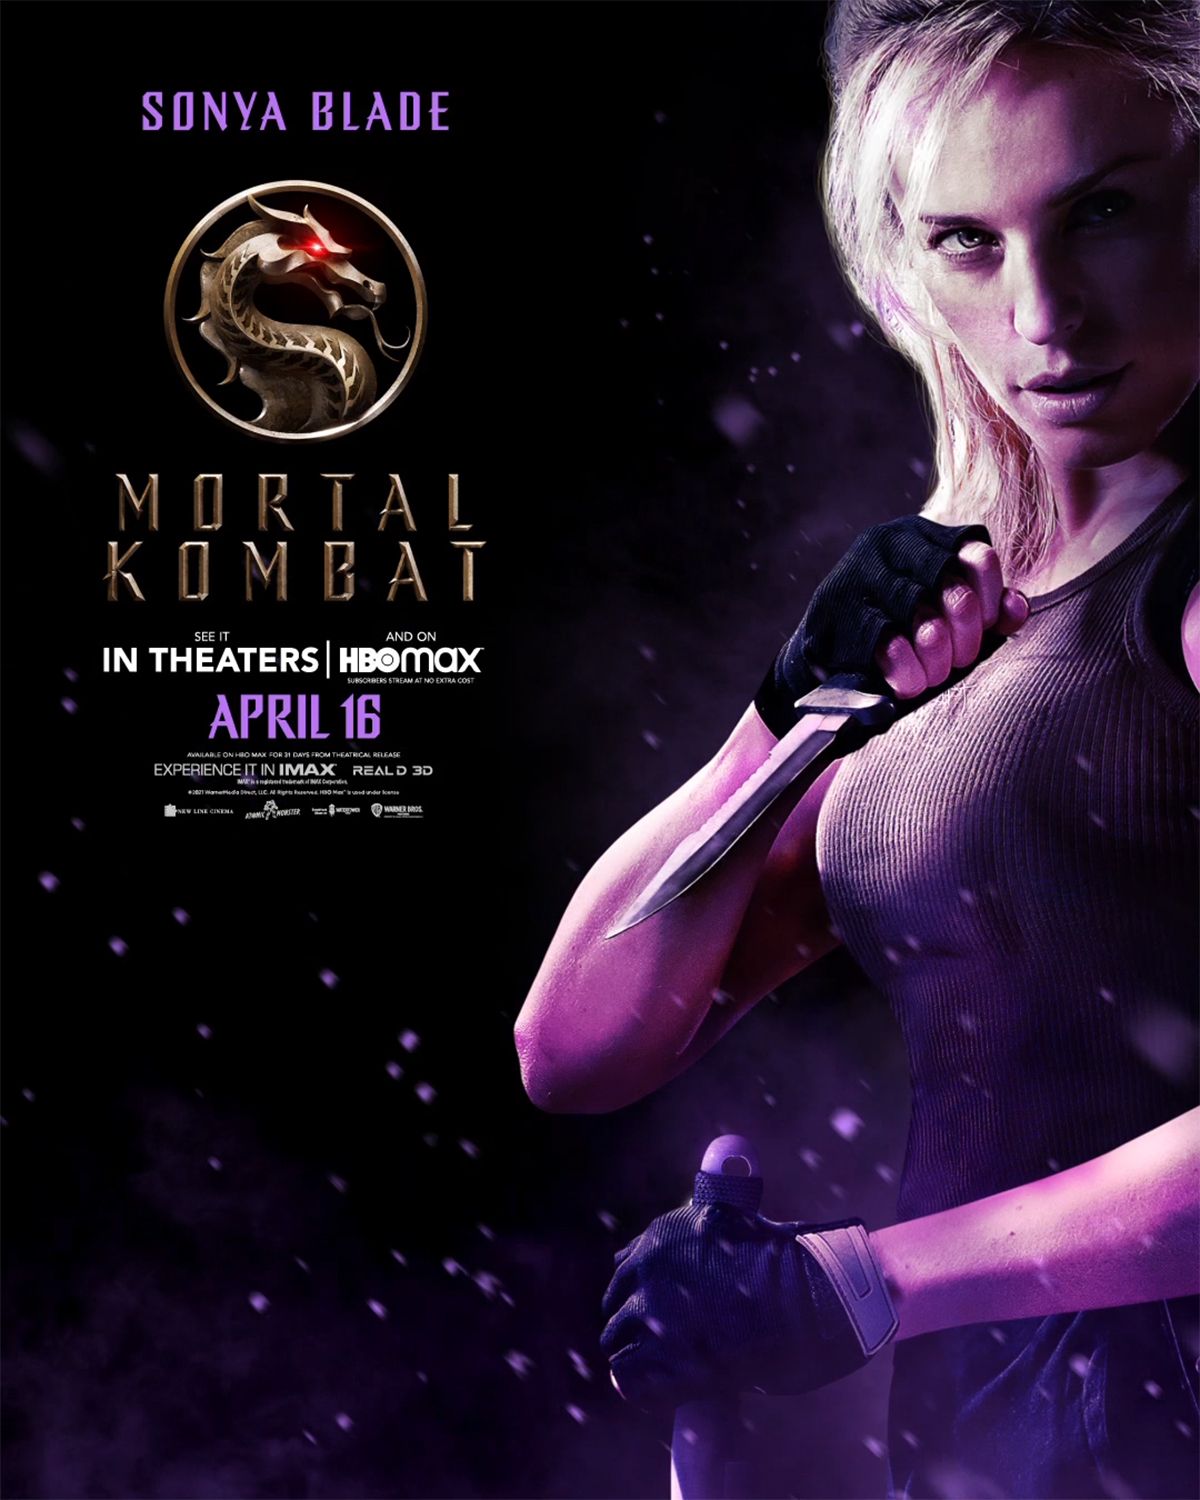 Sonya Blade character poster for Mortal Kombat movie